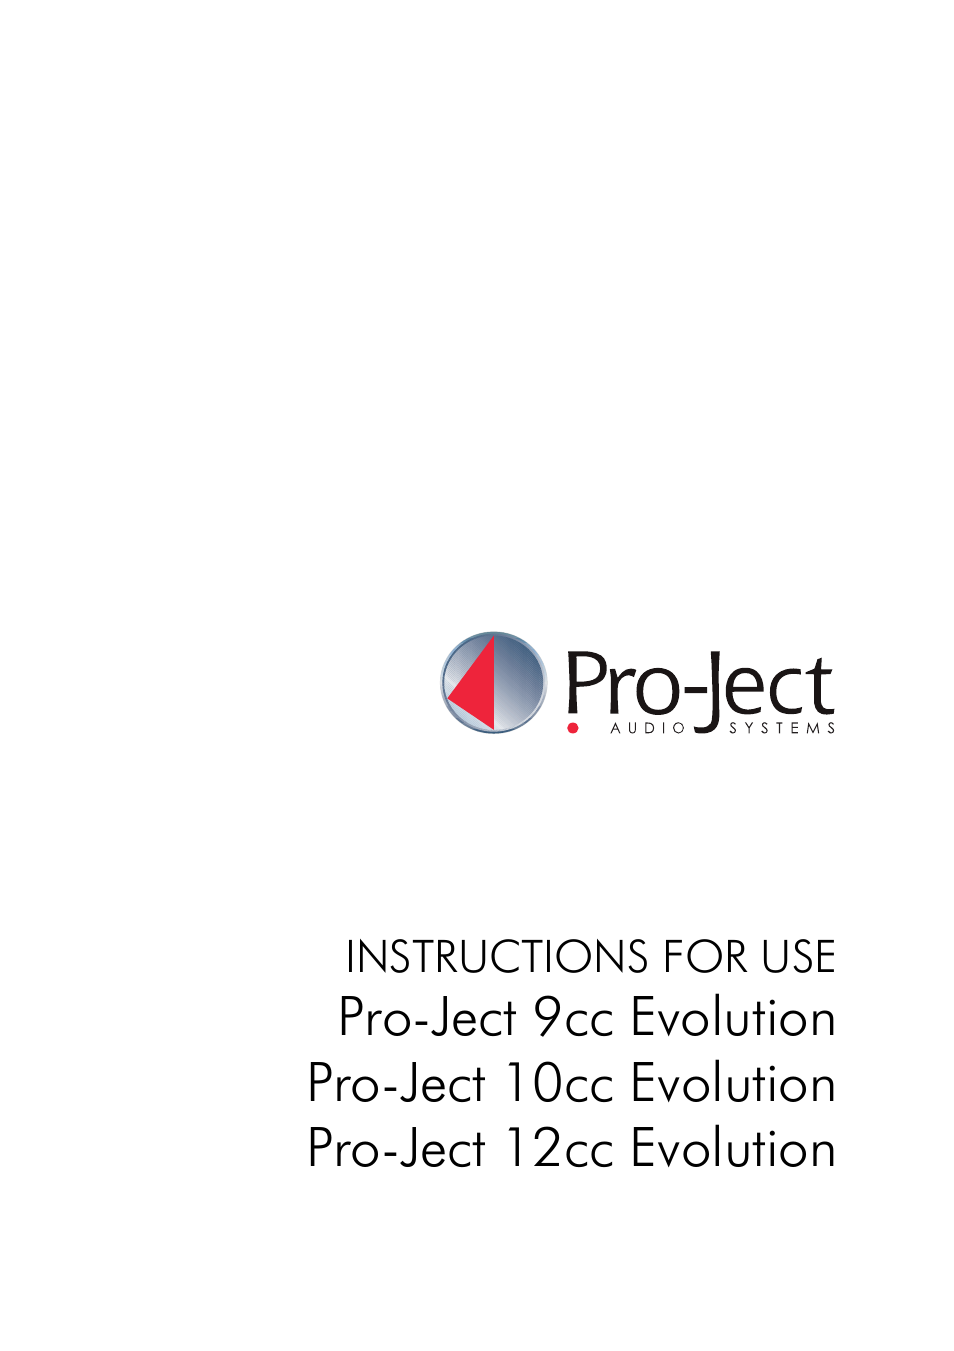 Pro-Ject 9cc Evolution